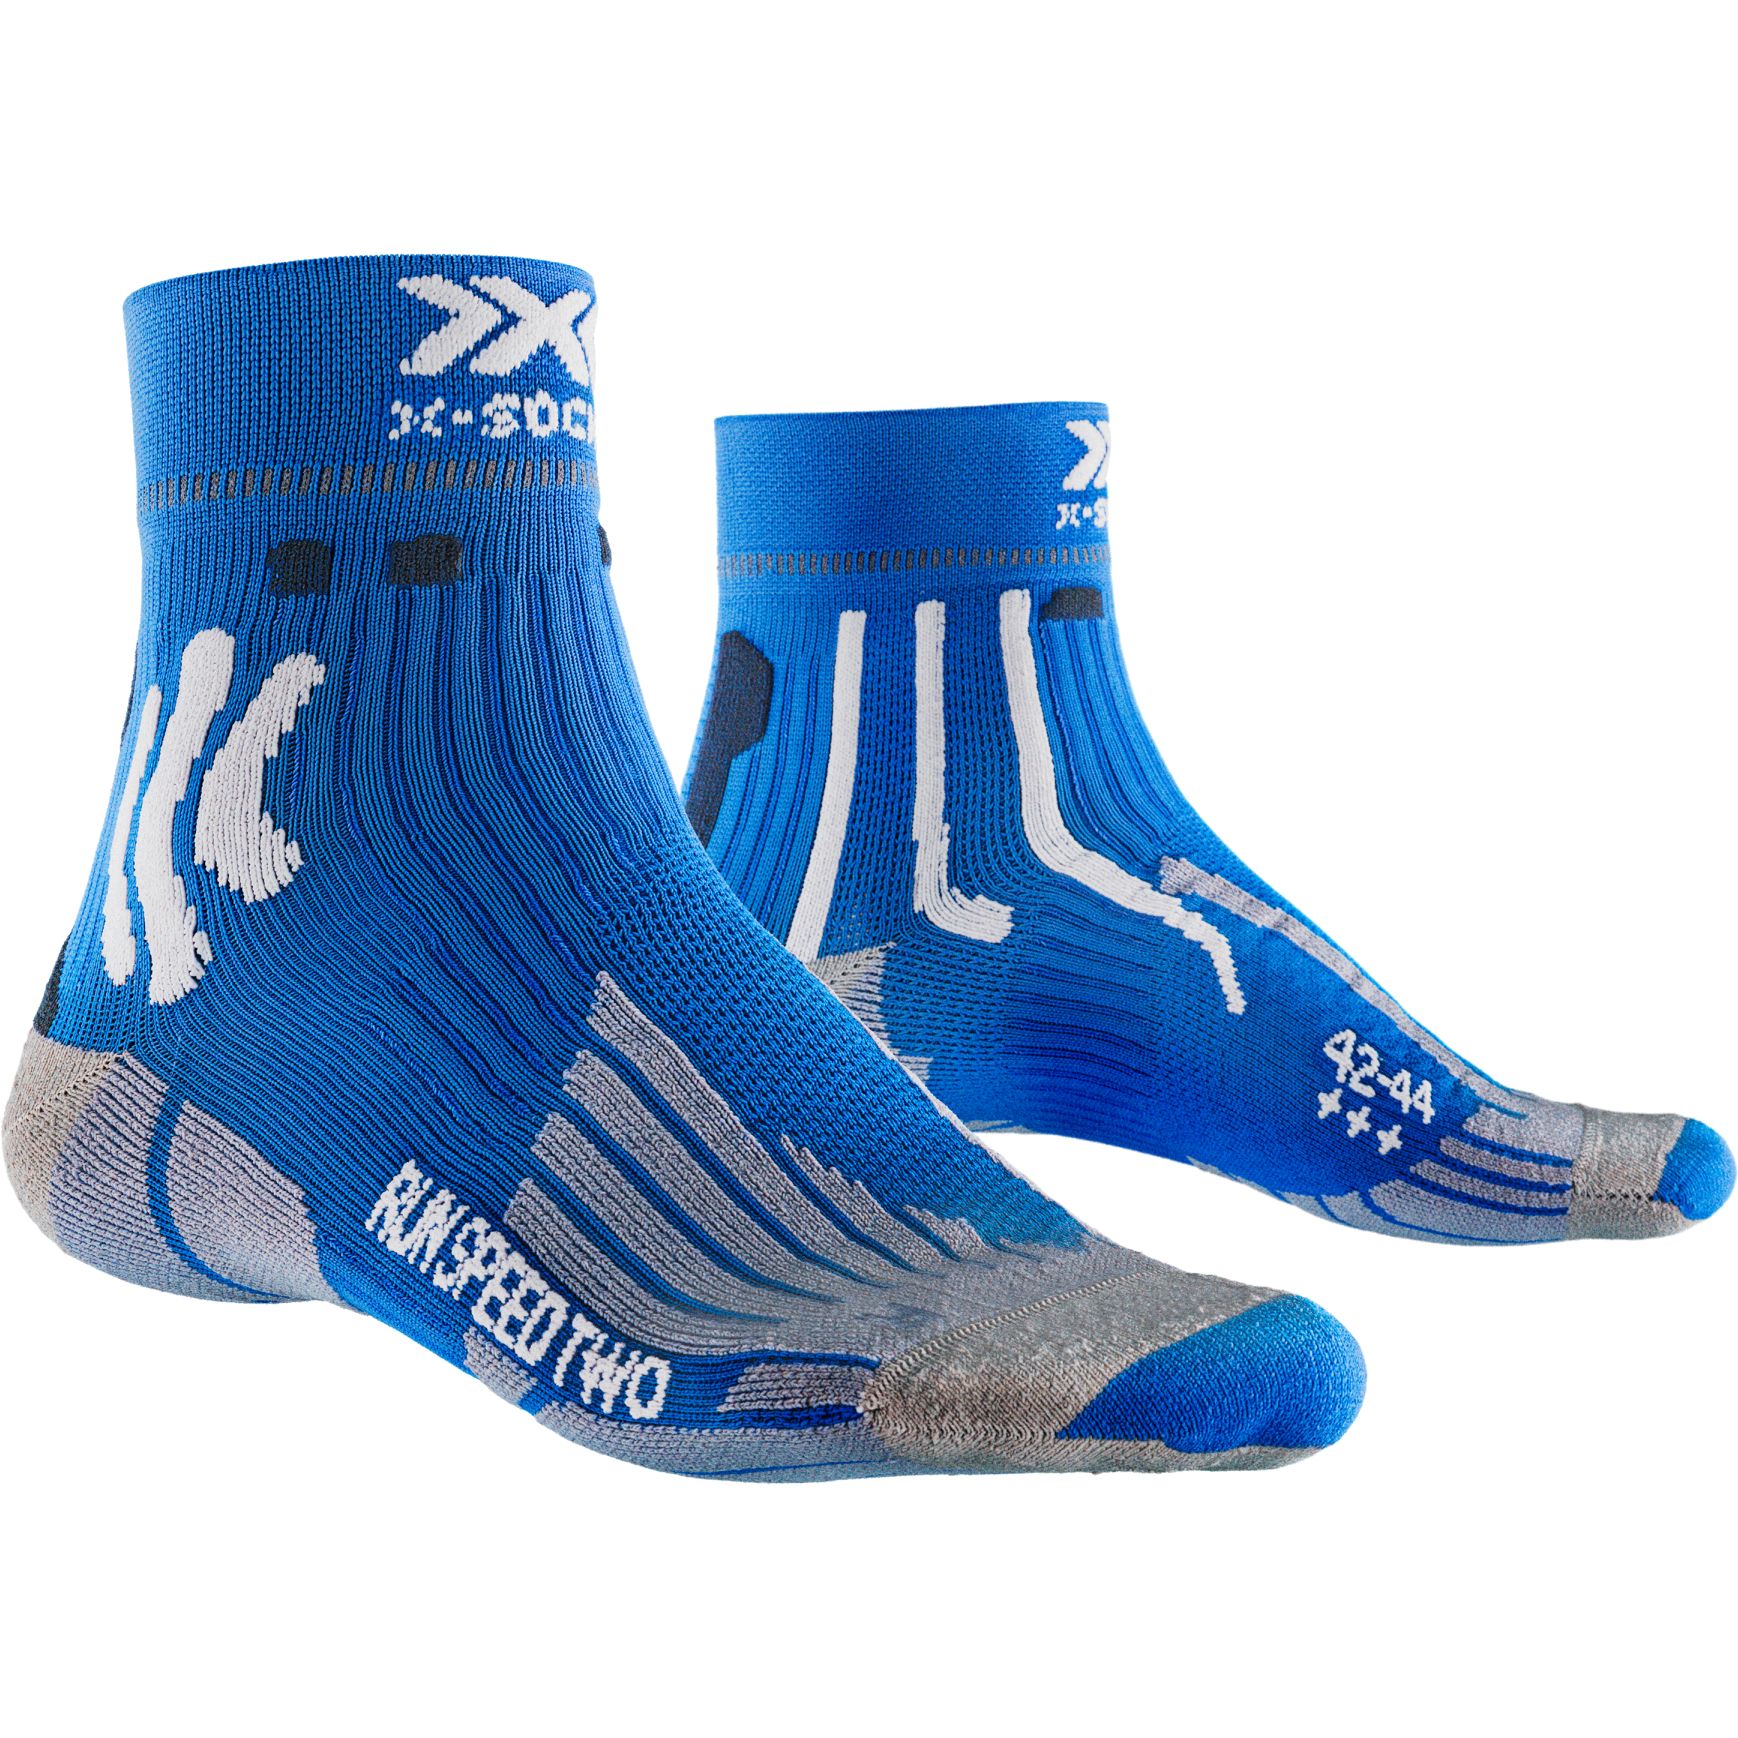 Productfoto van X-Socks Run Speed Two 4.0 Hardloopsokken - twyce blue/arctic white